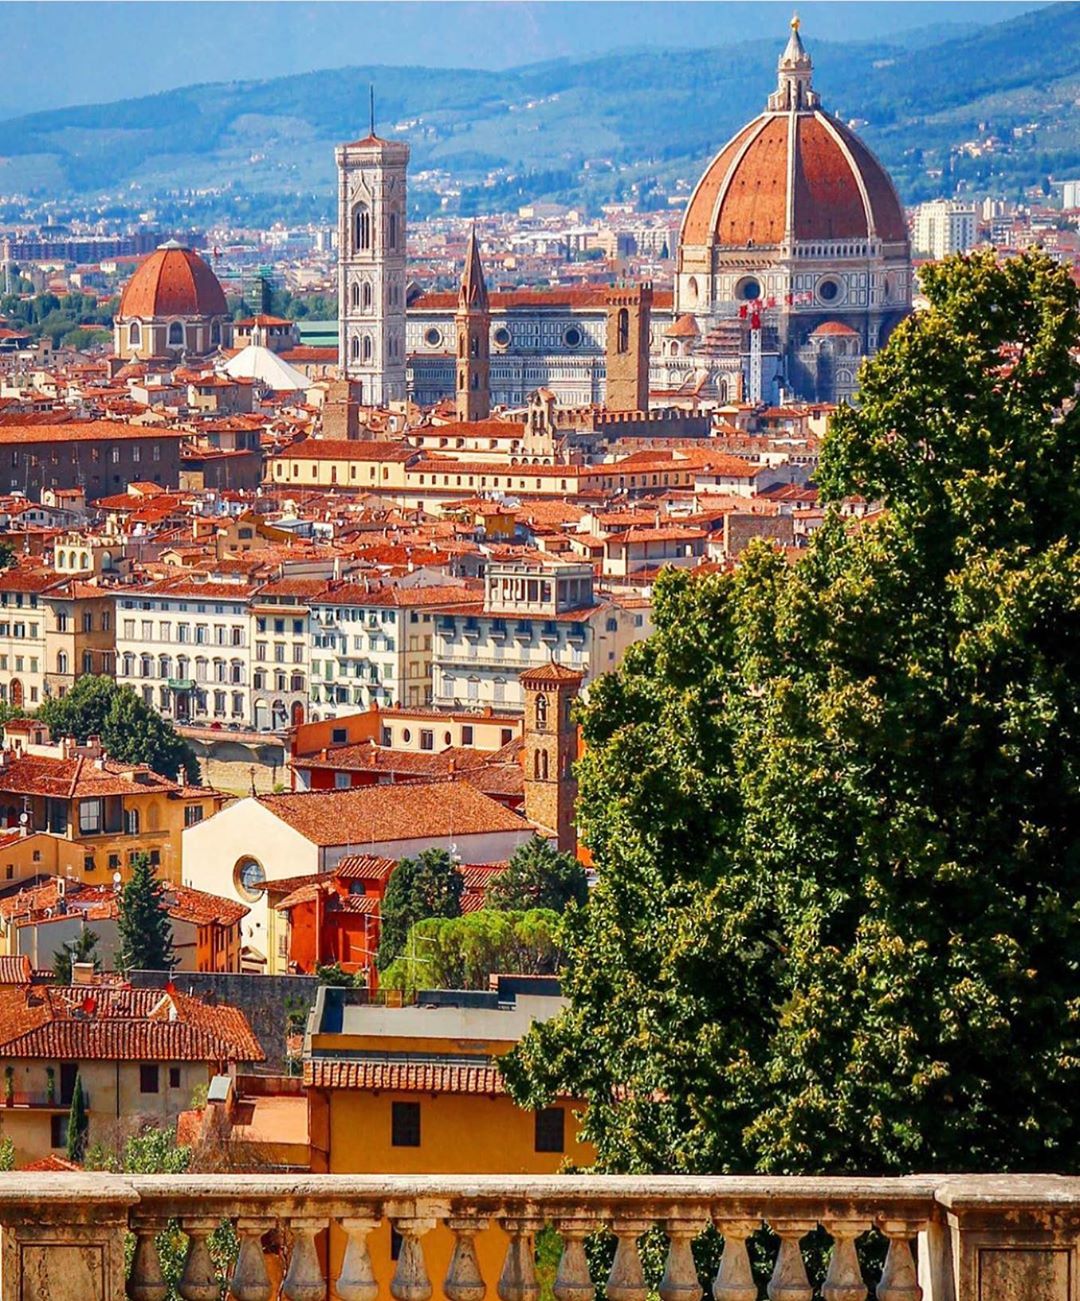 @RETRIP Global: 【RETRIP×イタリア】イタリア「フィレンツェ」は芸術と歴史に溢れるレトロな街です。赤いレンガが特徴的な街並みは街まるごと世界遺産に登録されています。ルネサ…